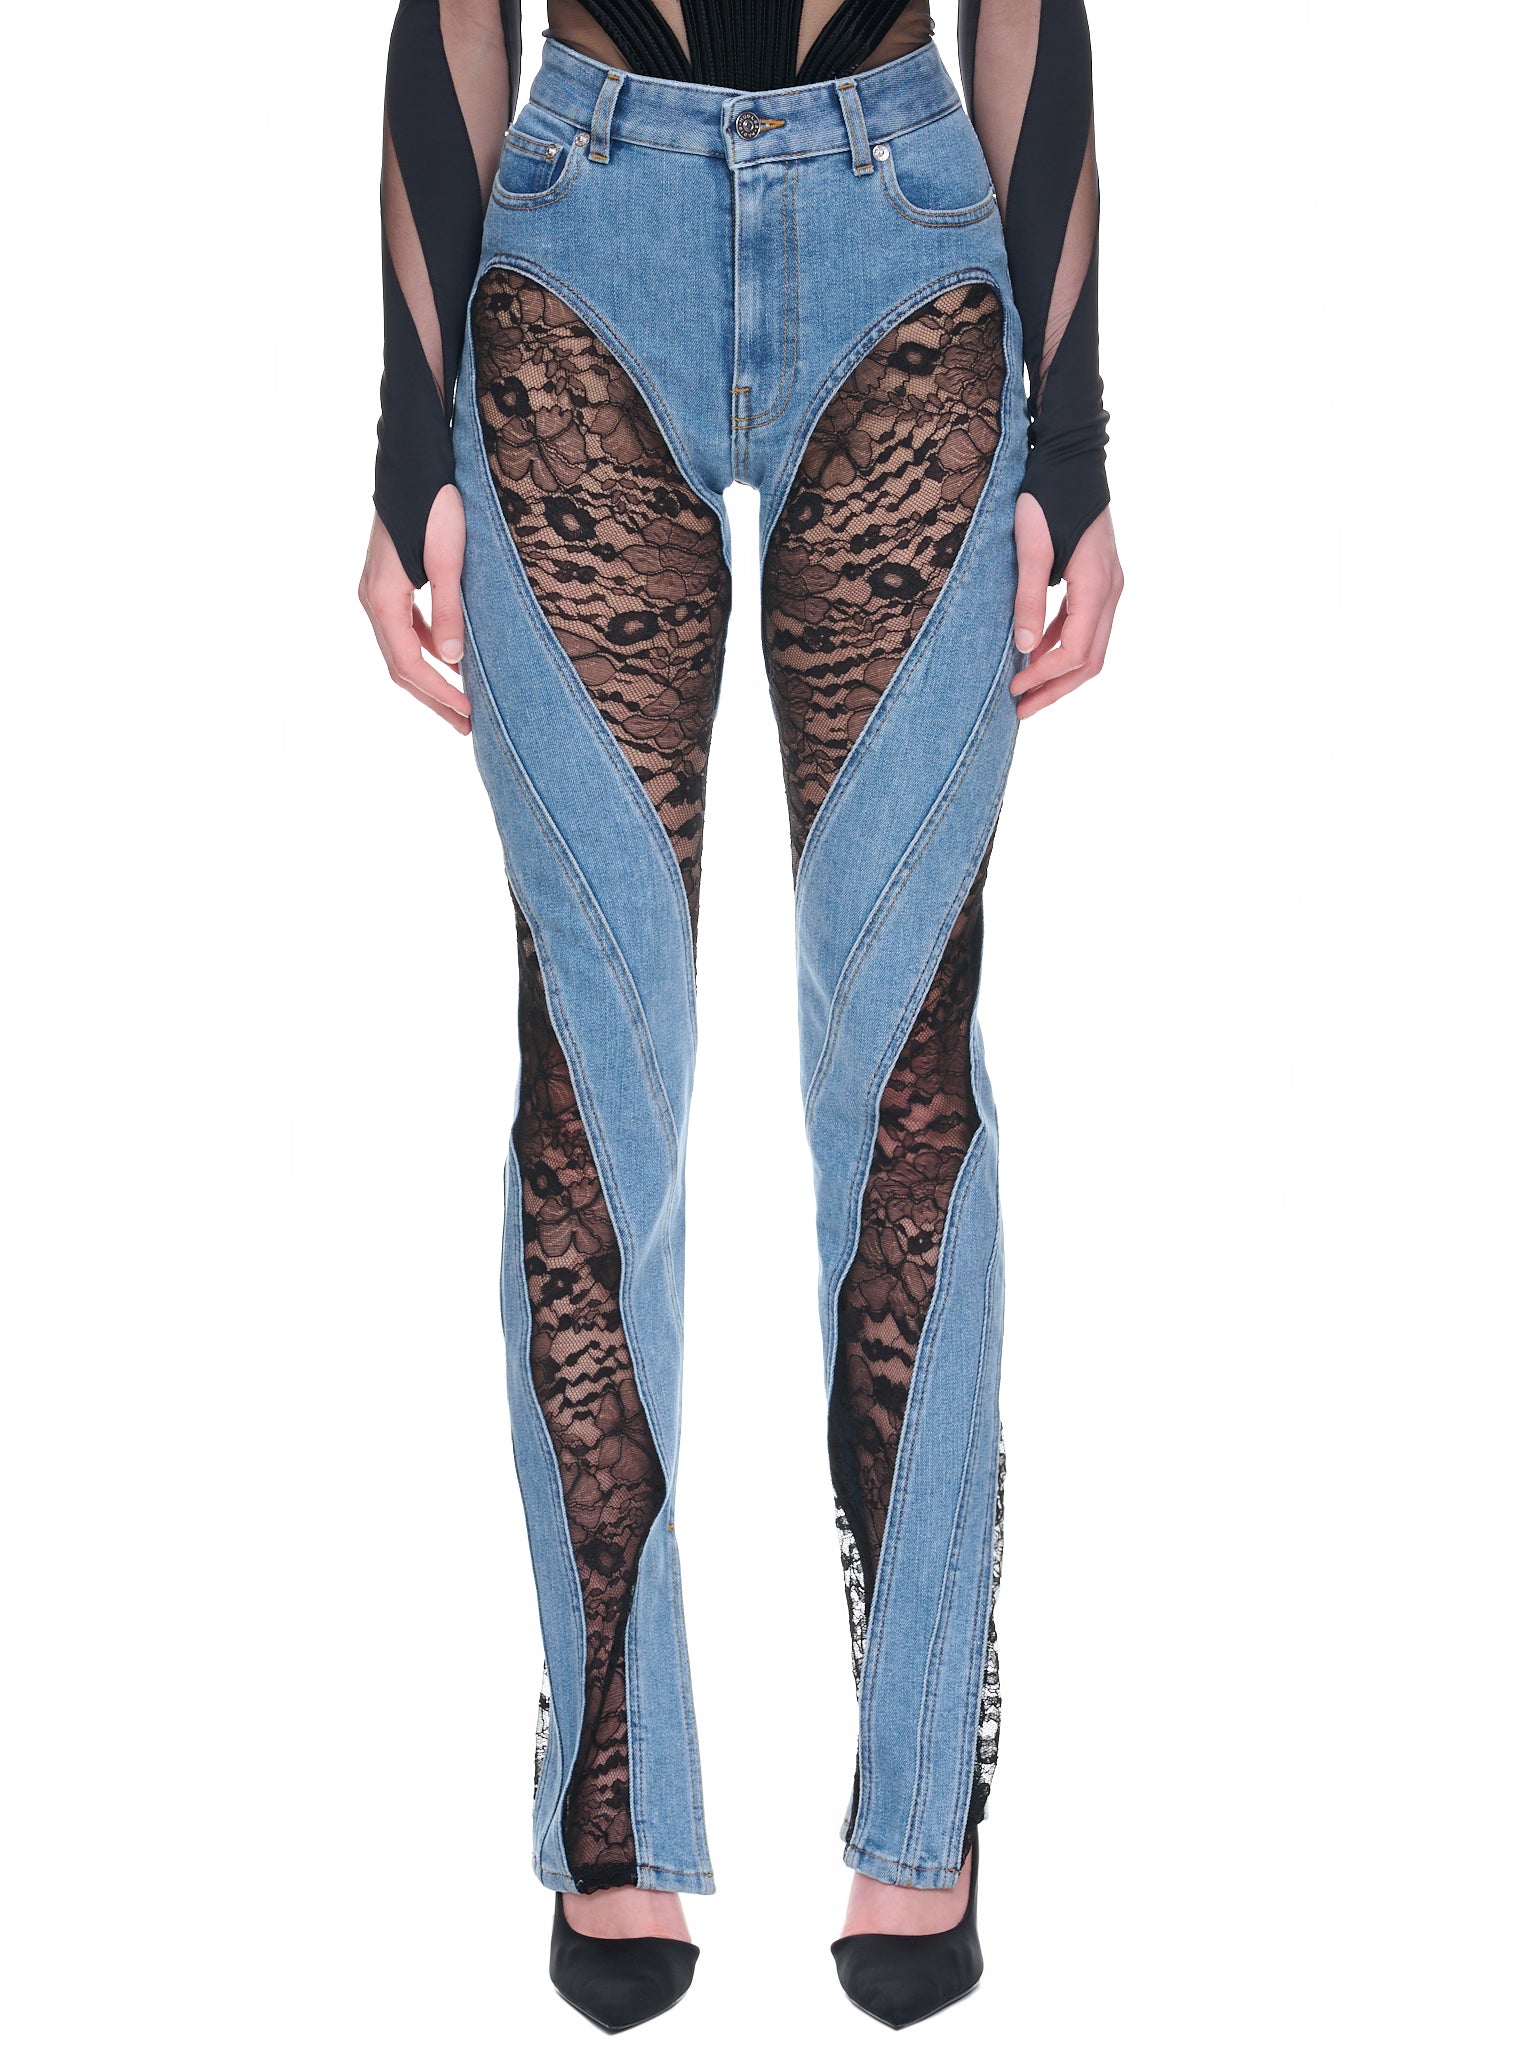 Lace Illusion Jeans (6PA0371265-3074-MEDIUM-BLUE-BL)